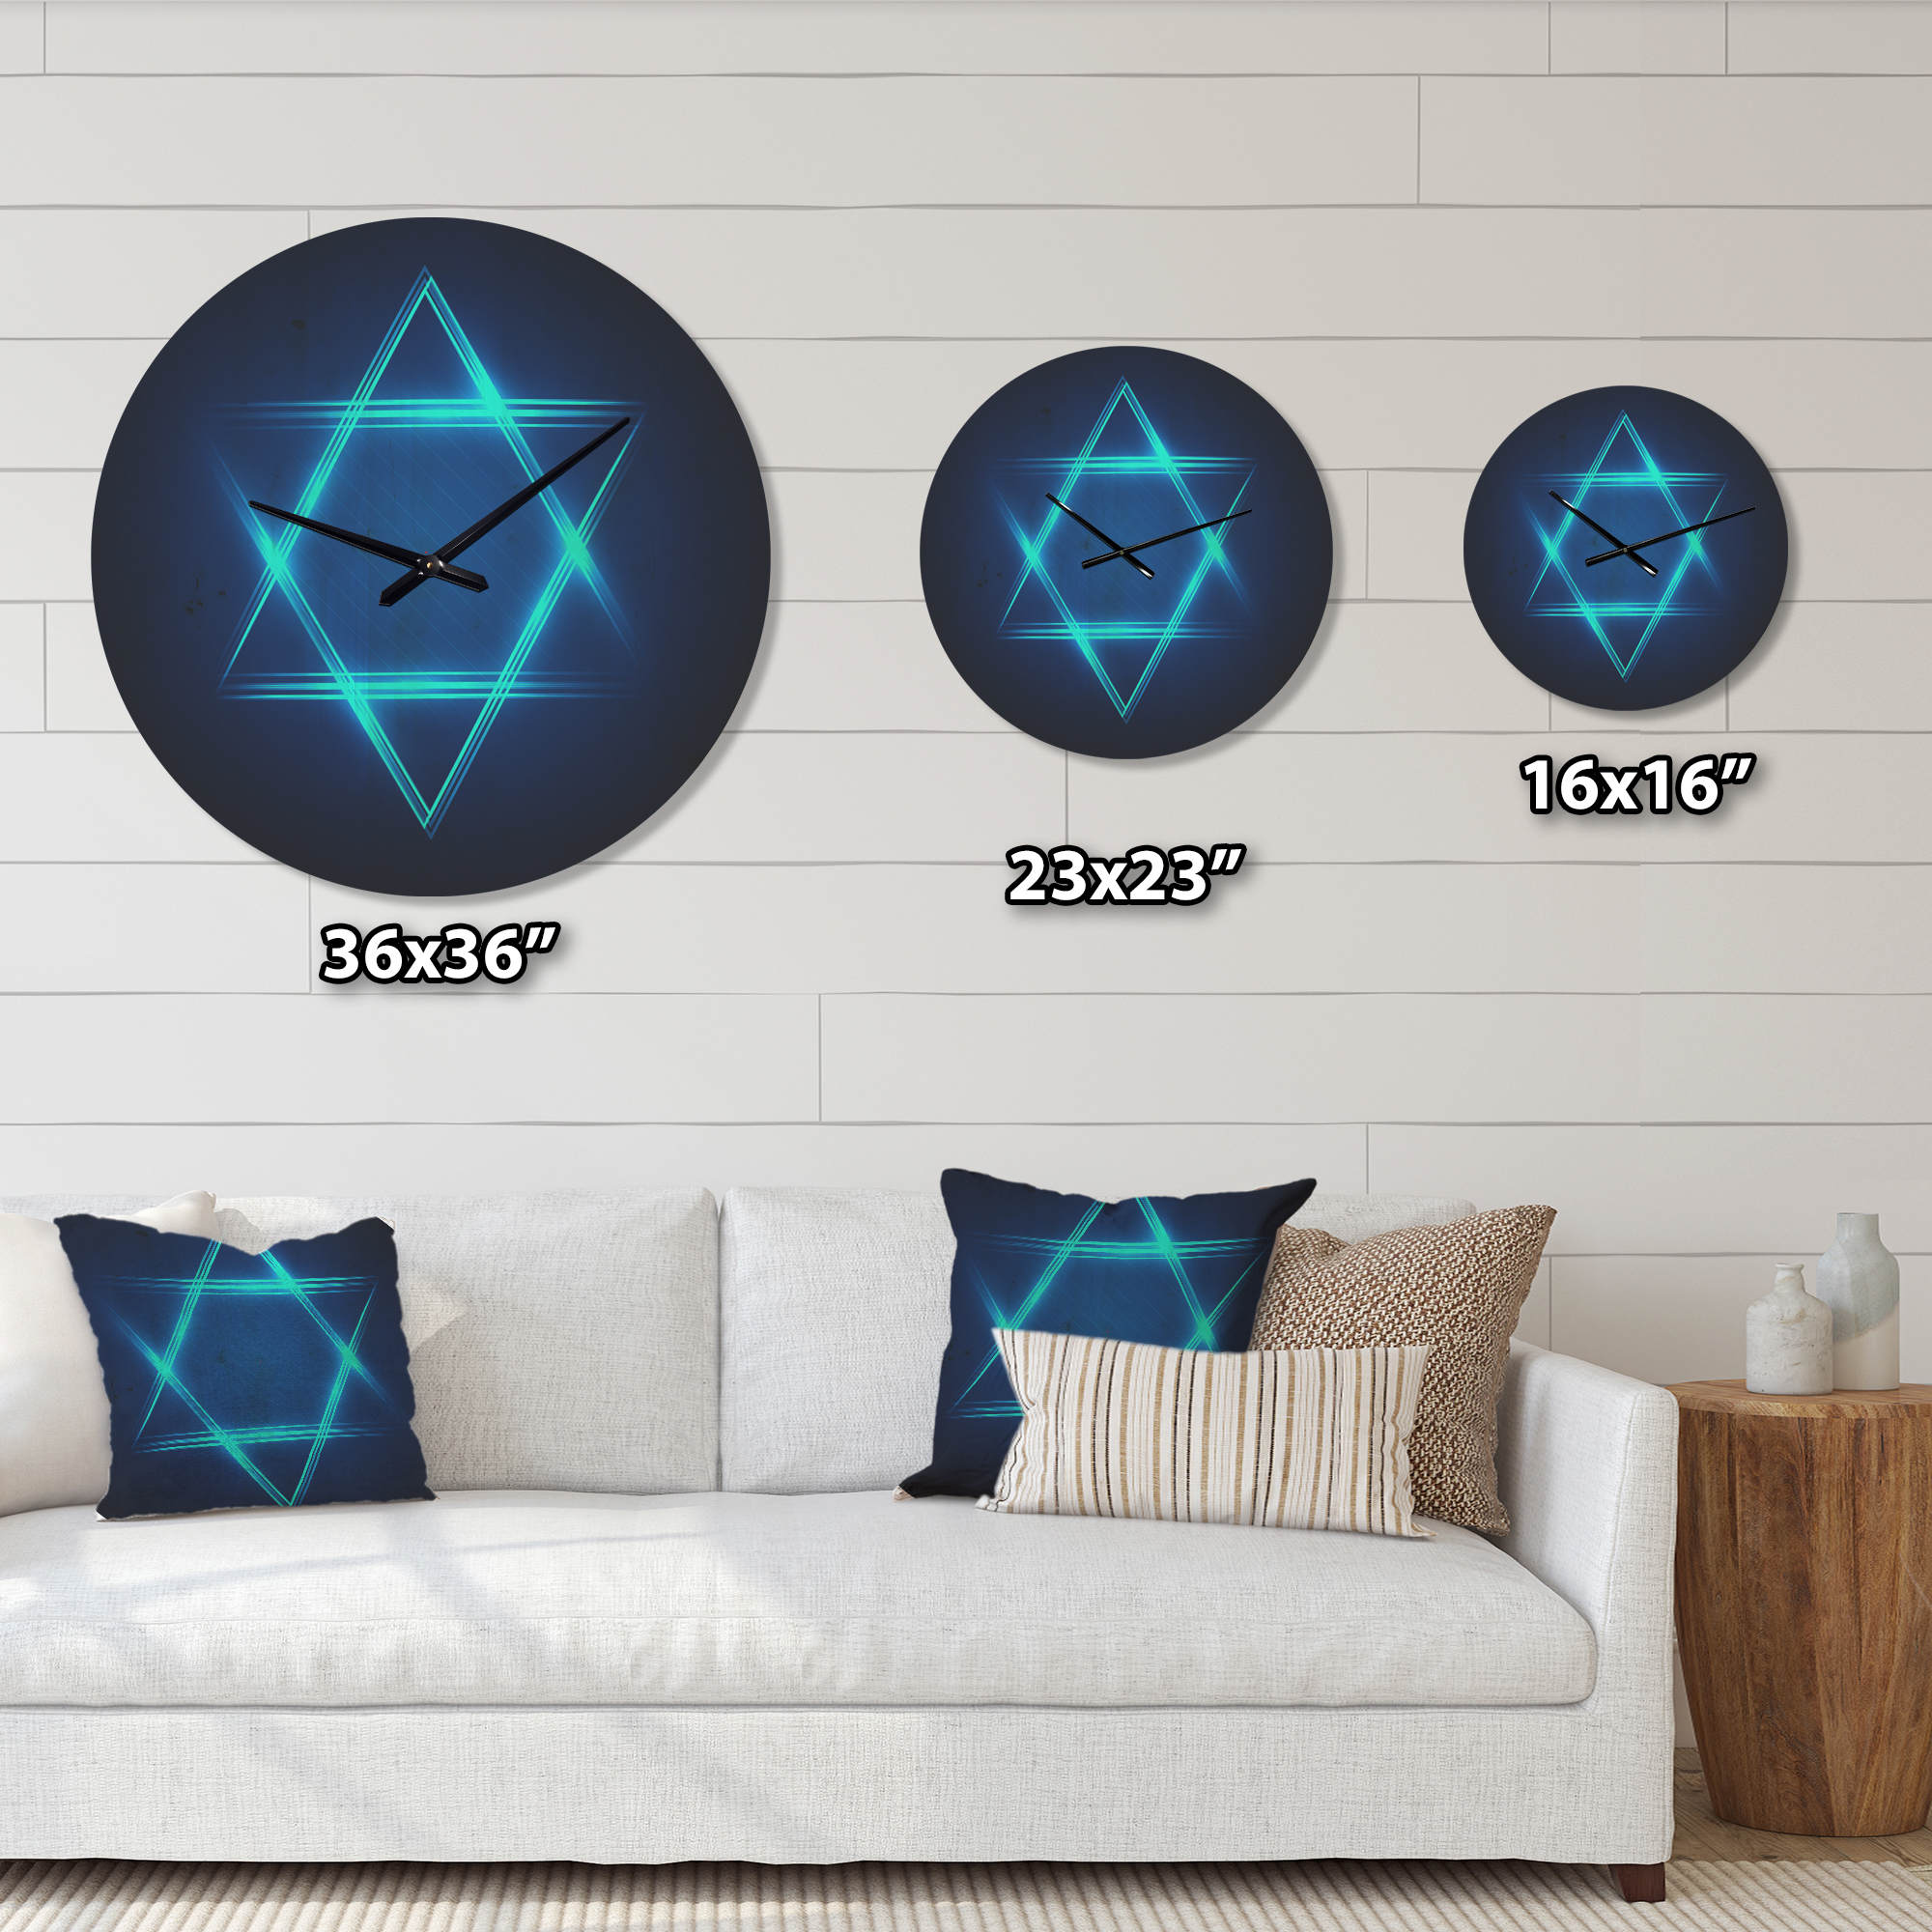 Designart 'Blue Neon Star of David' Modern Wood Wall Clock - image 4 of 5